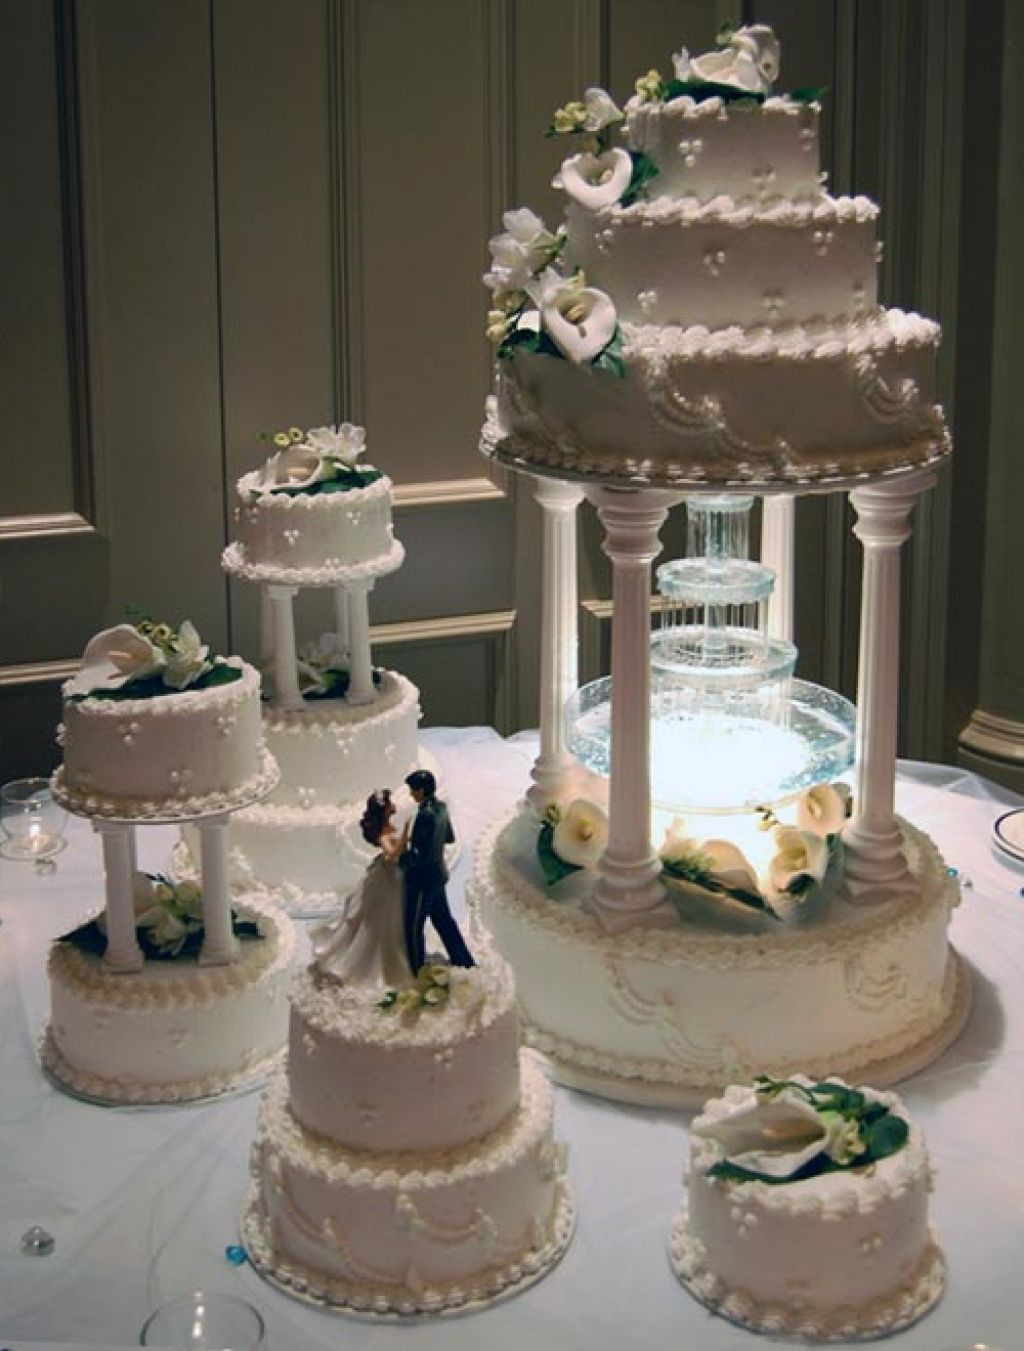 Water Fountain Wedding Cakes
 Four tier water fountain butter cream wedding cake